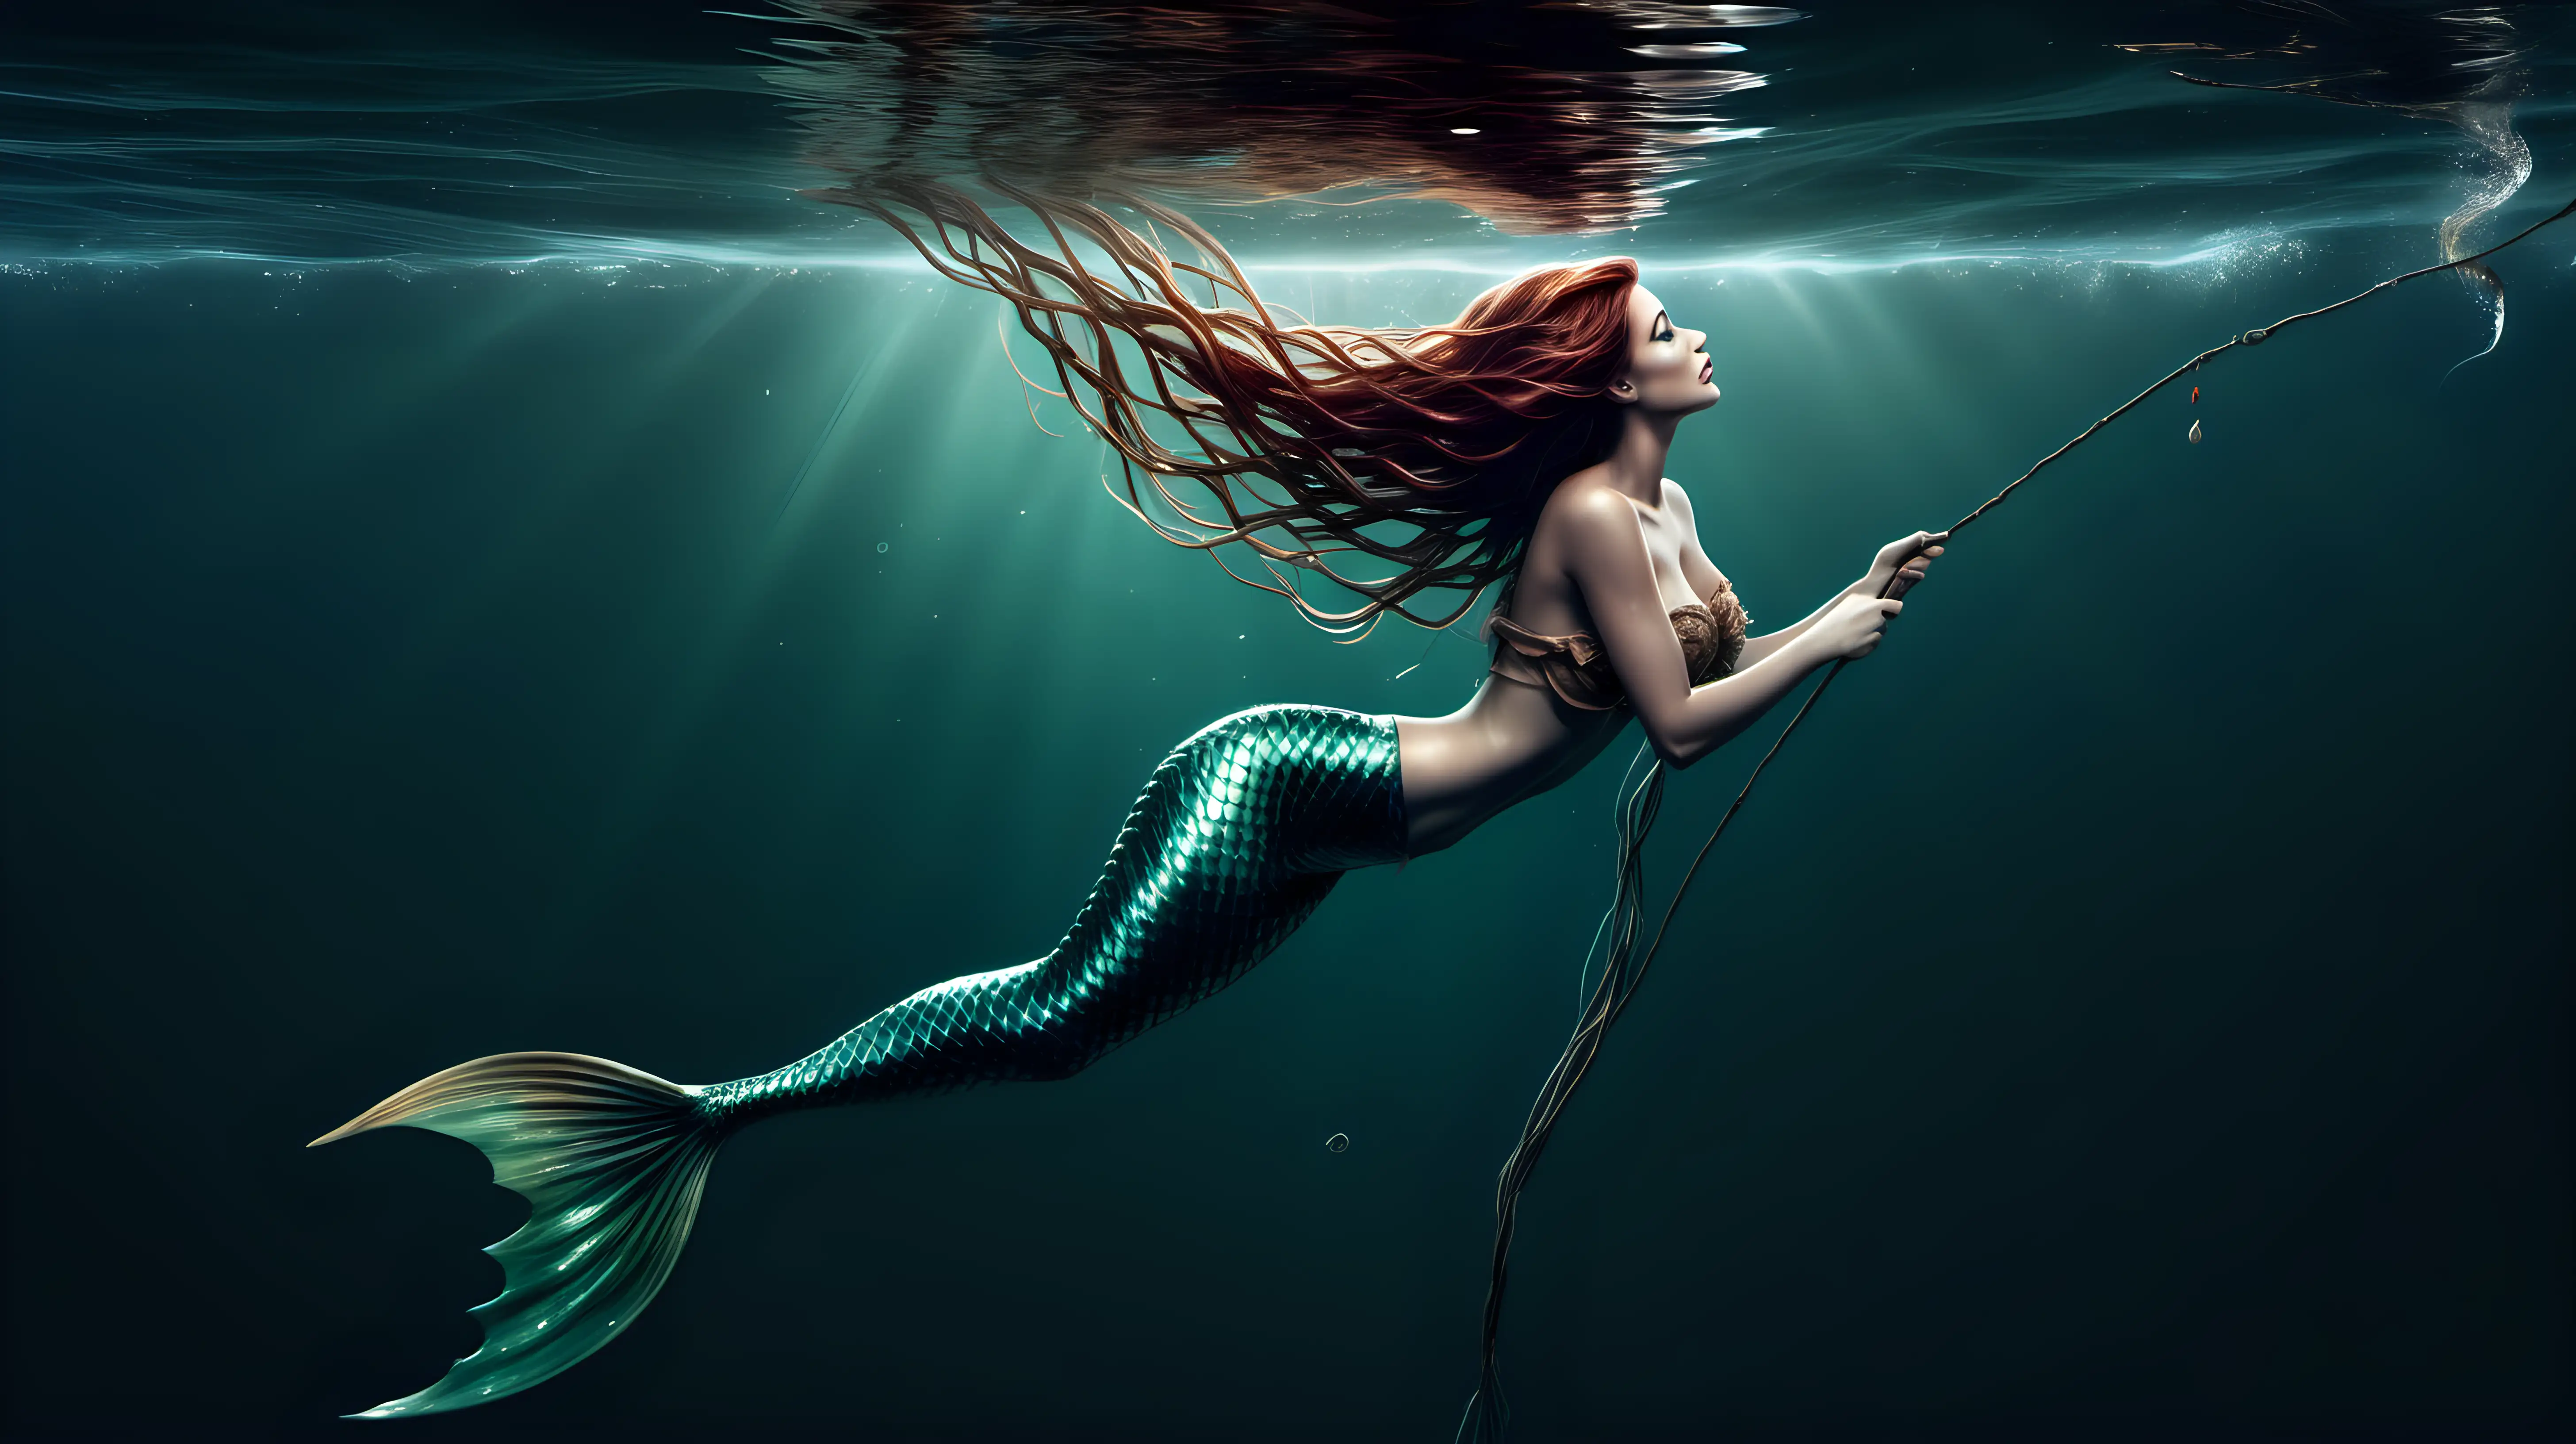 Struggling Mermaid Entangled in Fishing Line